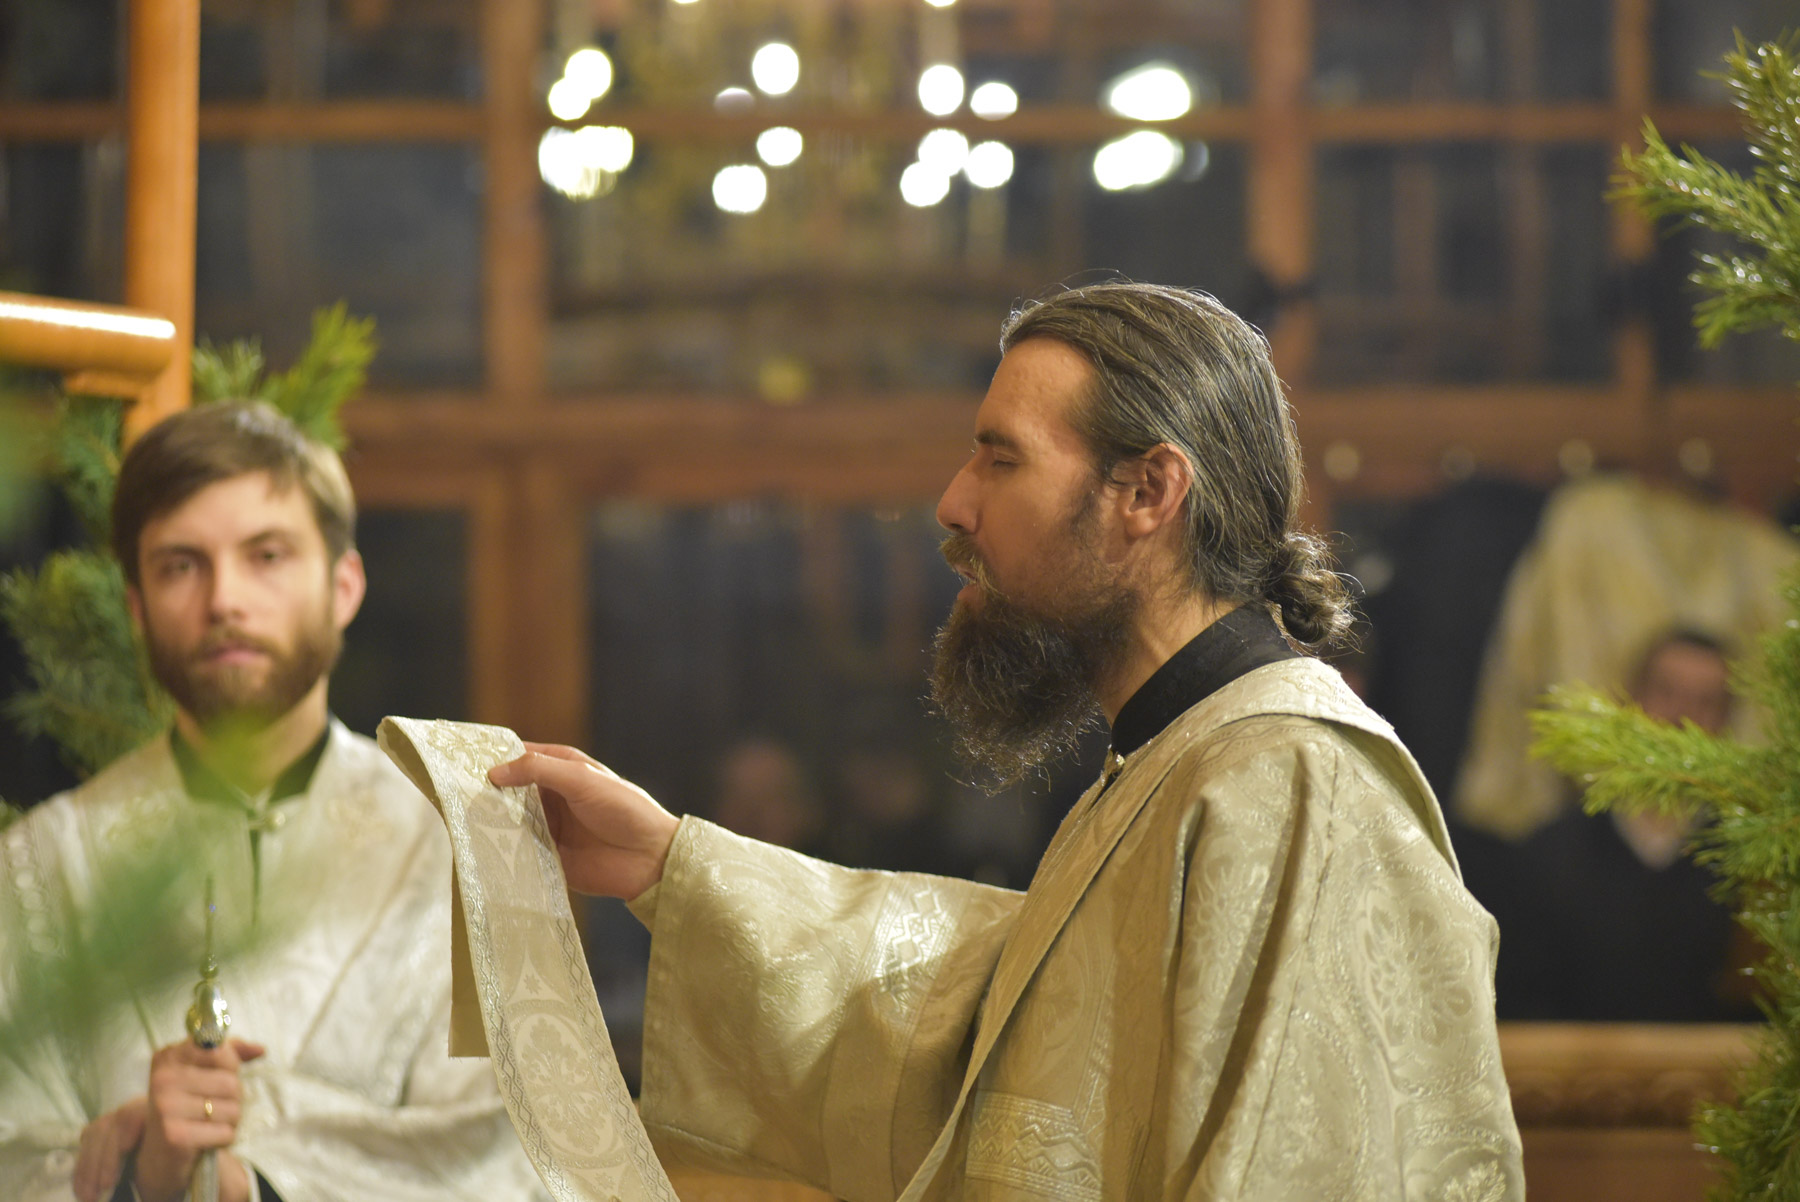 photos of orthodox christmas 0308